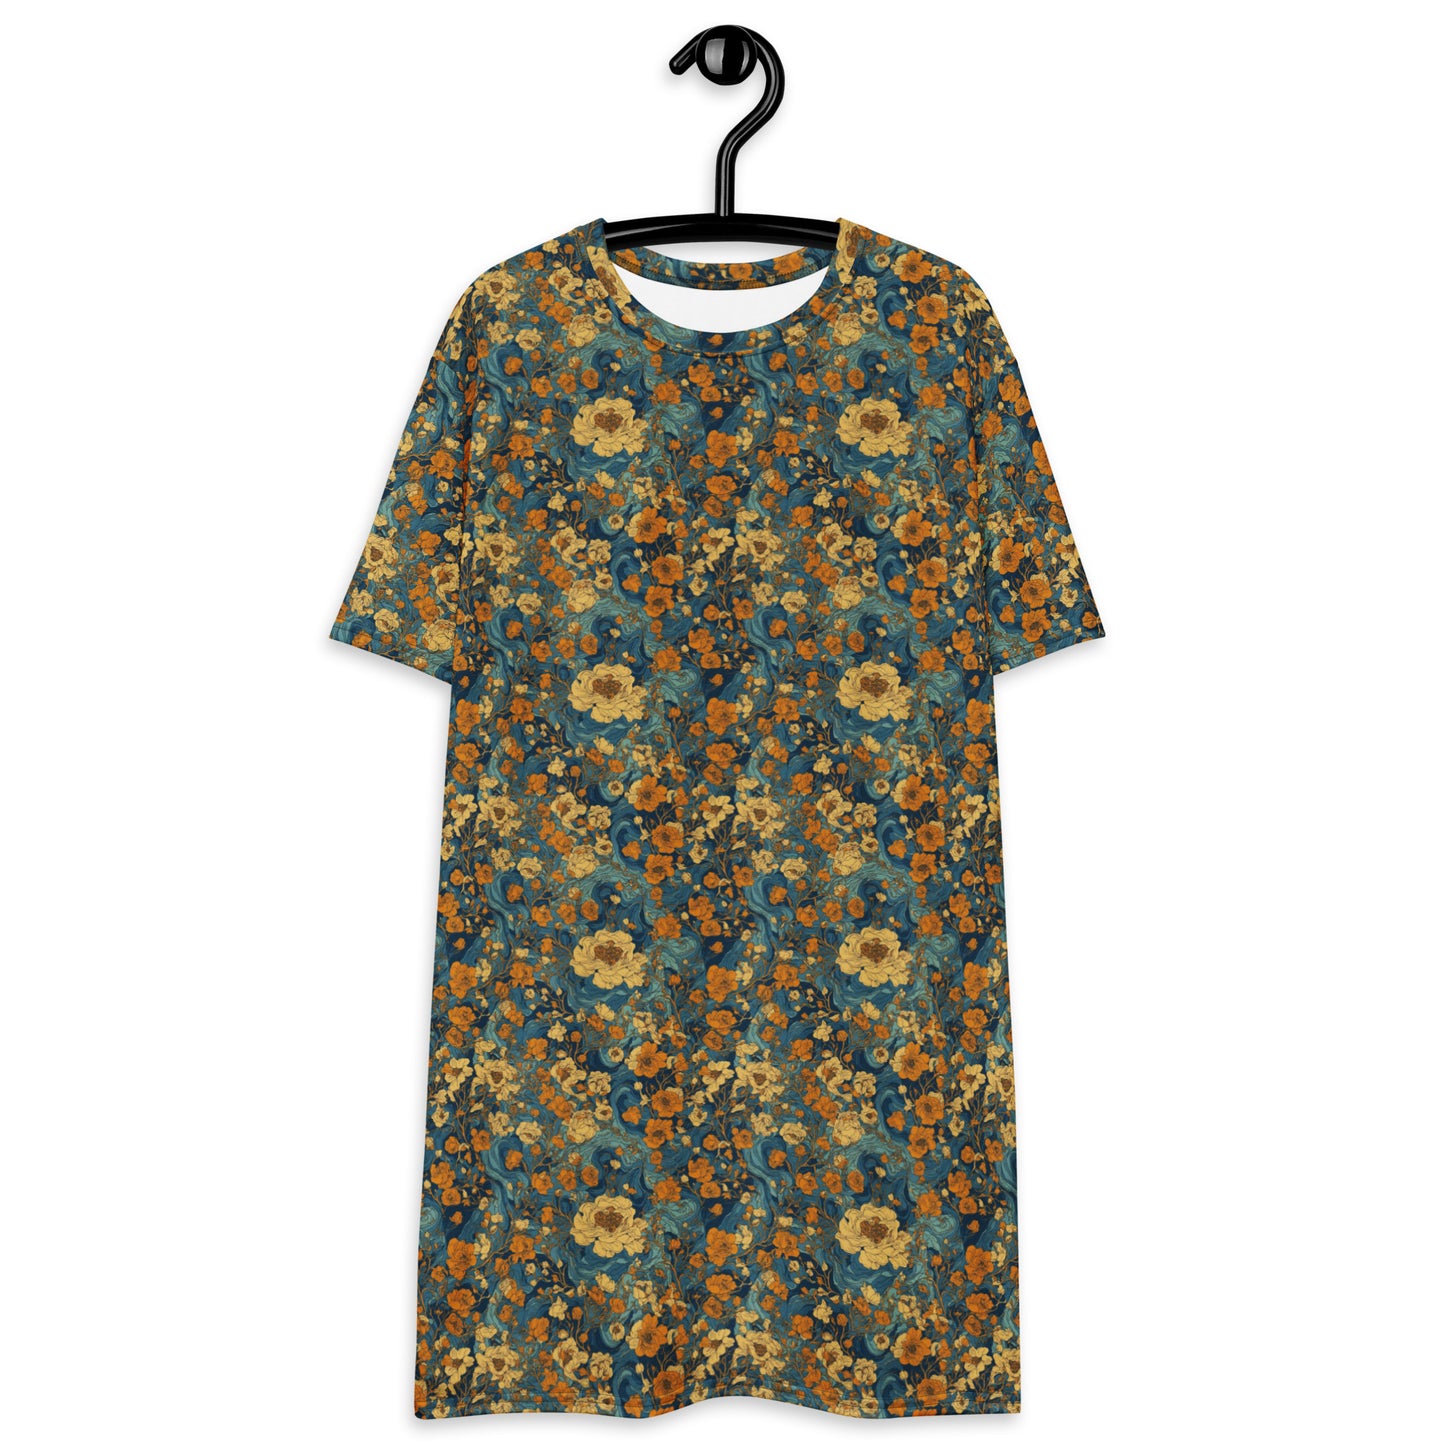 T-shirt dress - Premium  from Elementologie - Just $46.99! Shop now at Elementologie